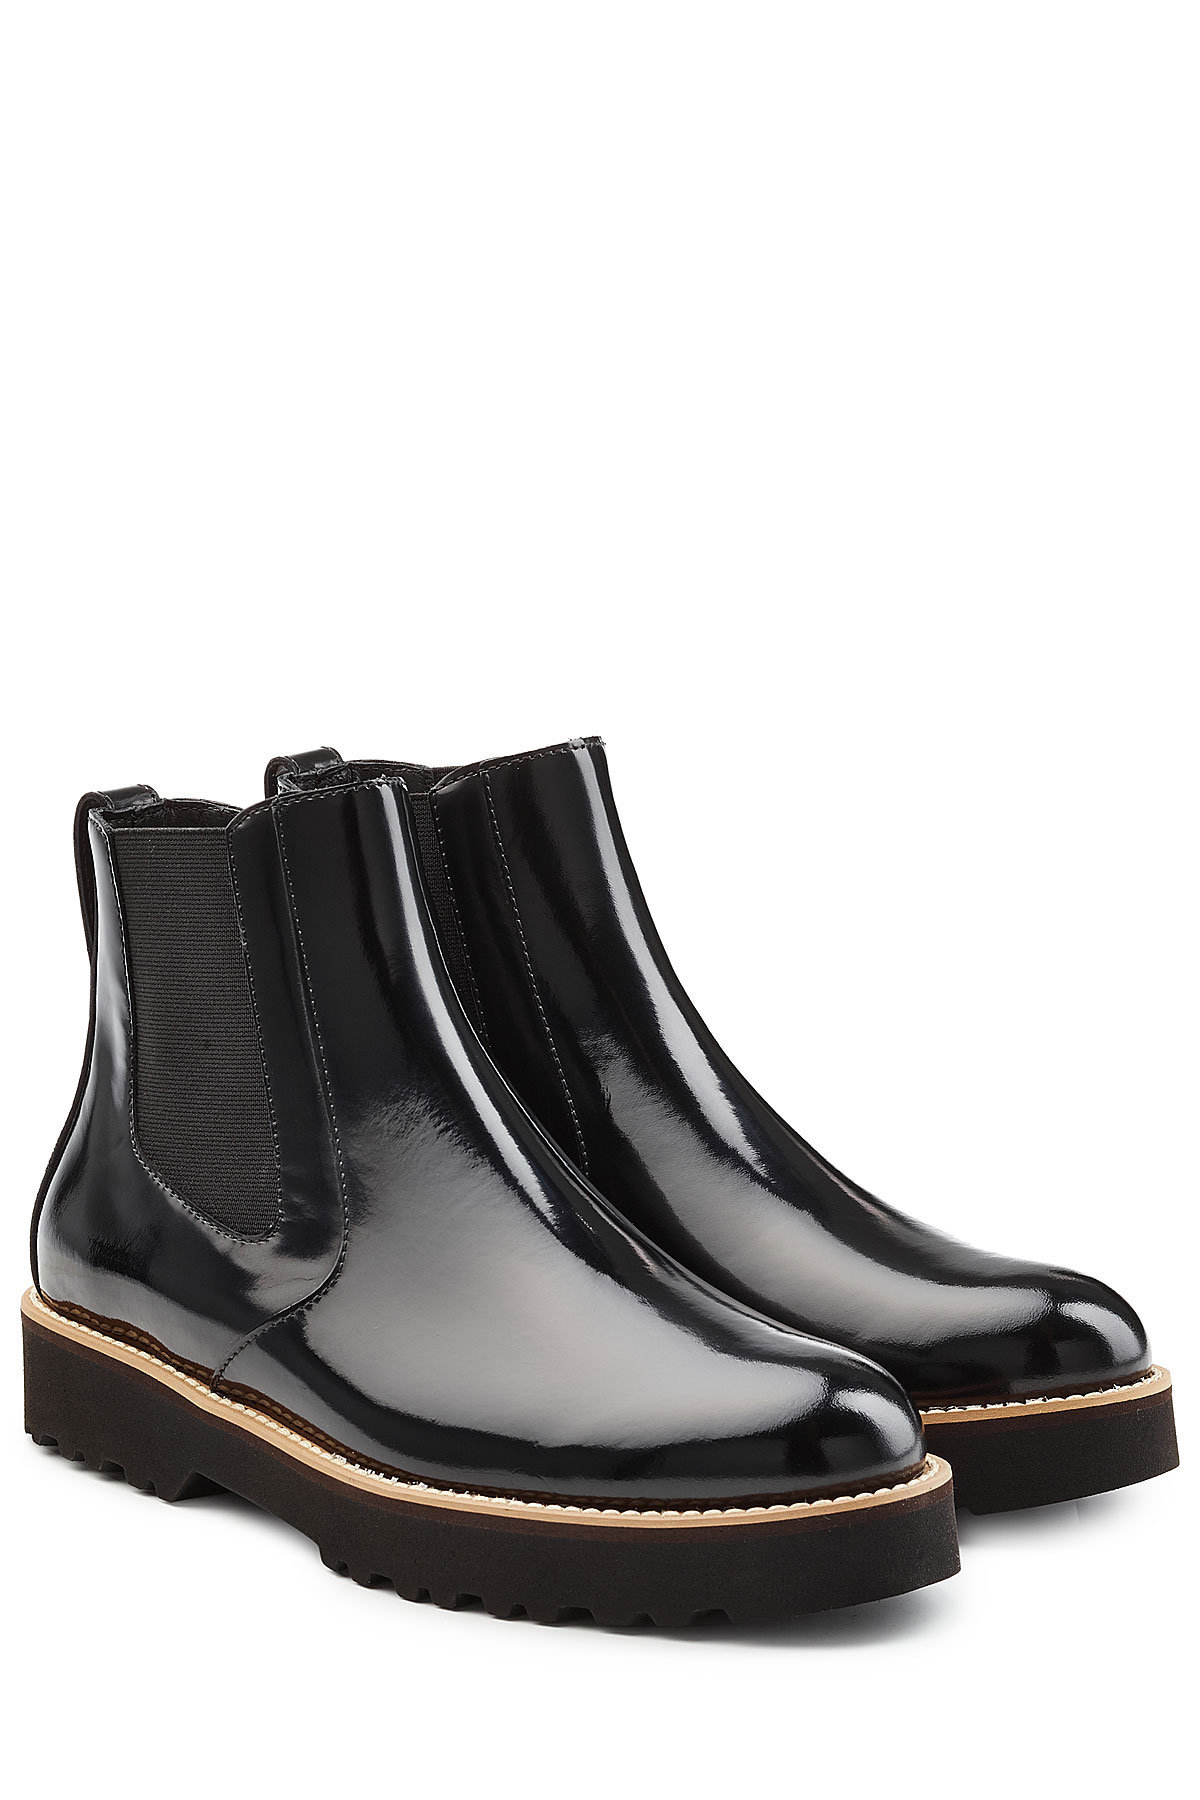 Hogan - Patent Leather Chelsea Boots